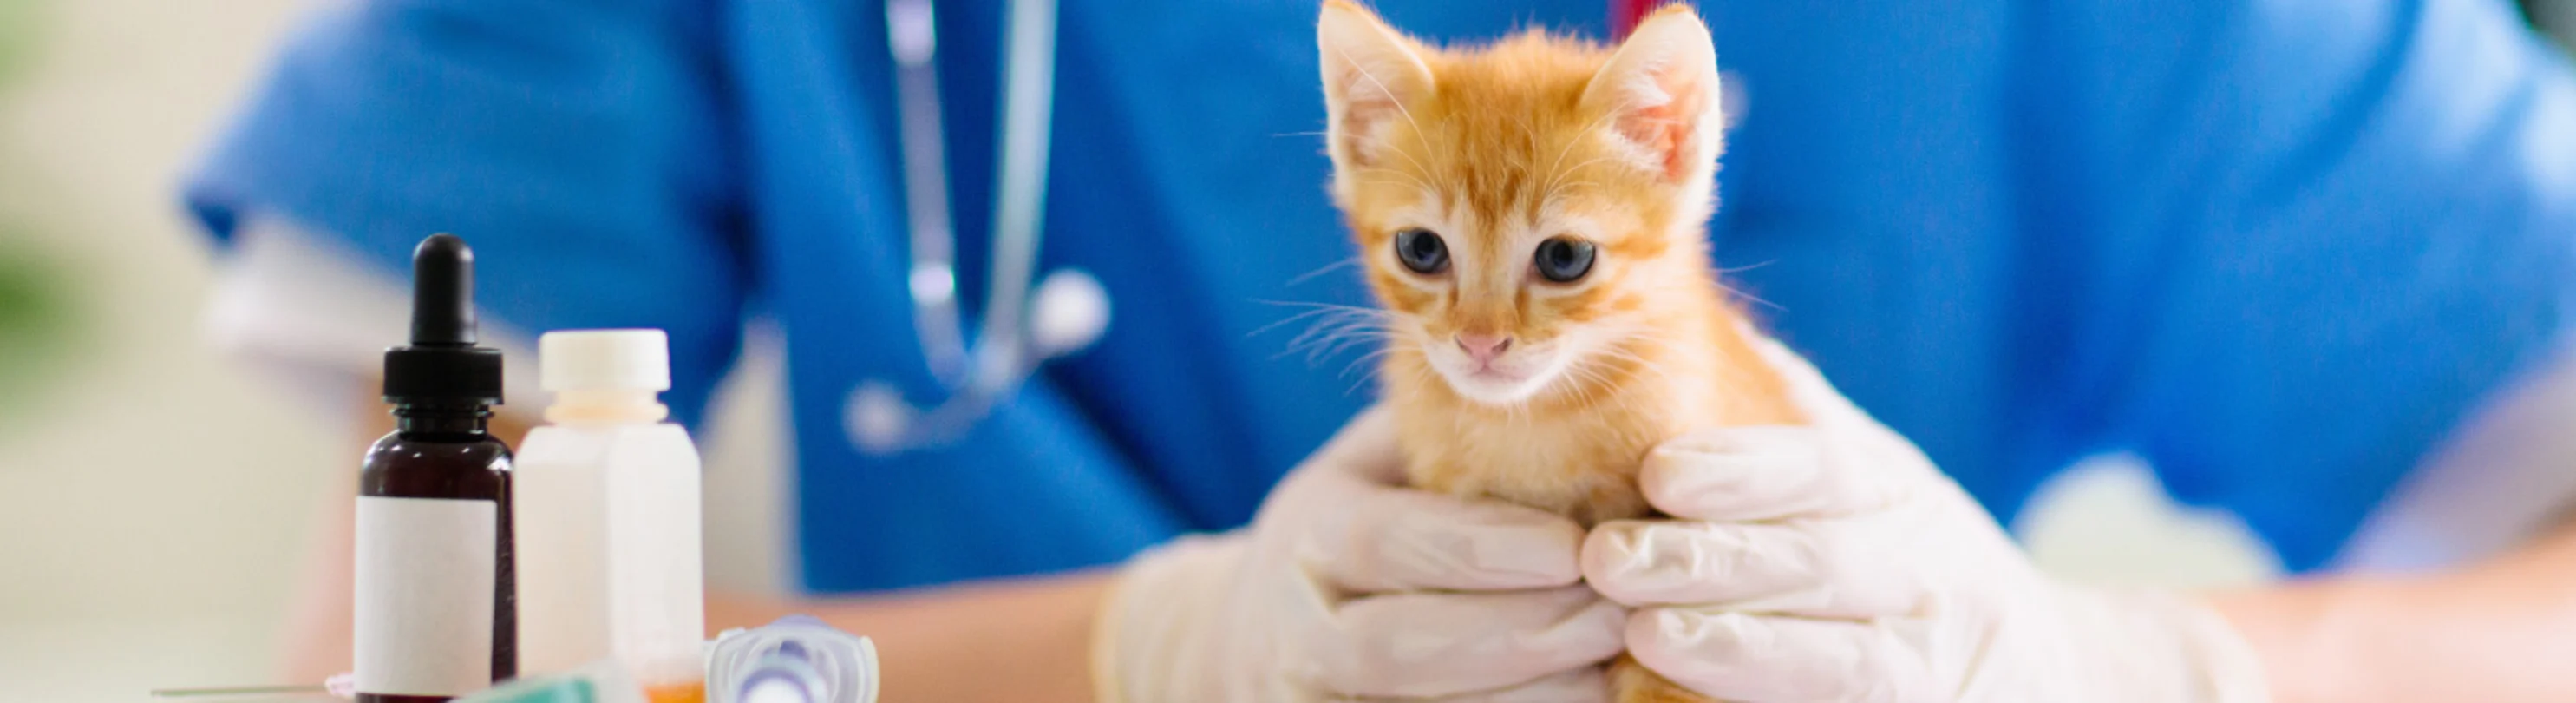 Kitten in Clinic with nurse